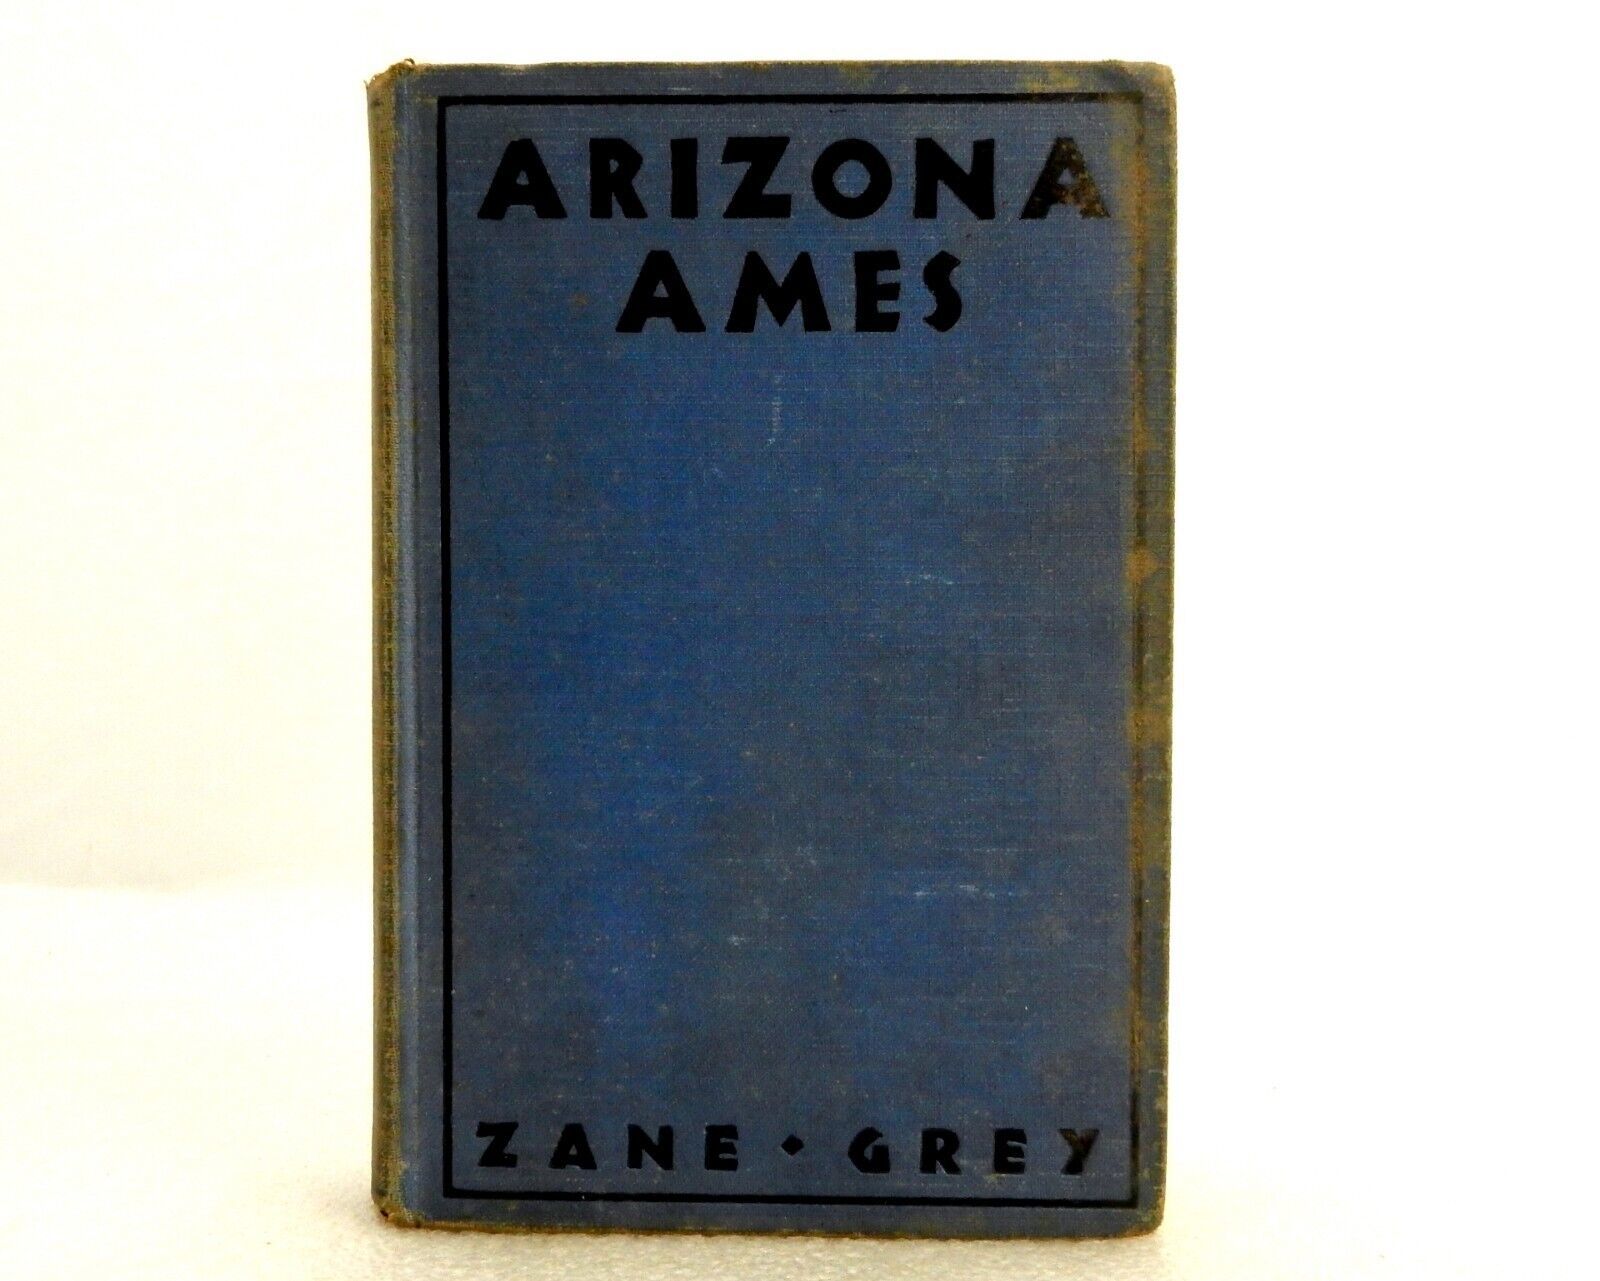 Primary image for "Arizona Ames", Zane Grey Western Novel, 1932 Hard Cover, Good Condition